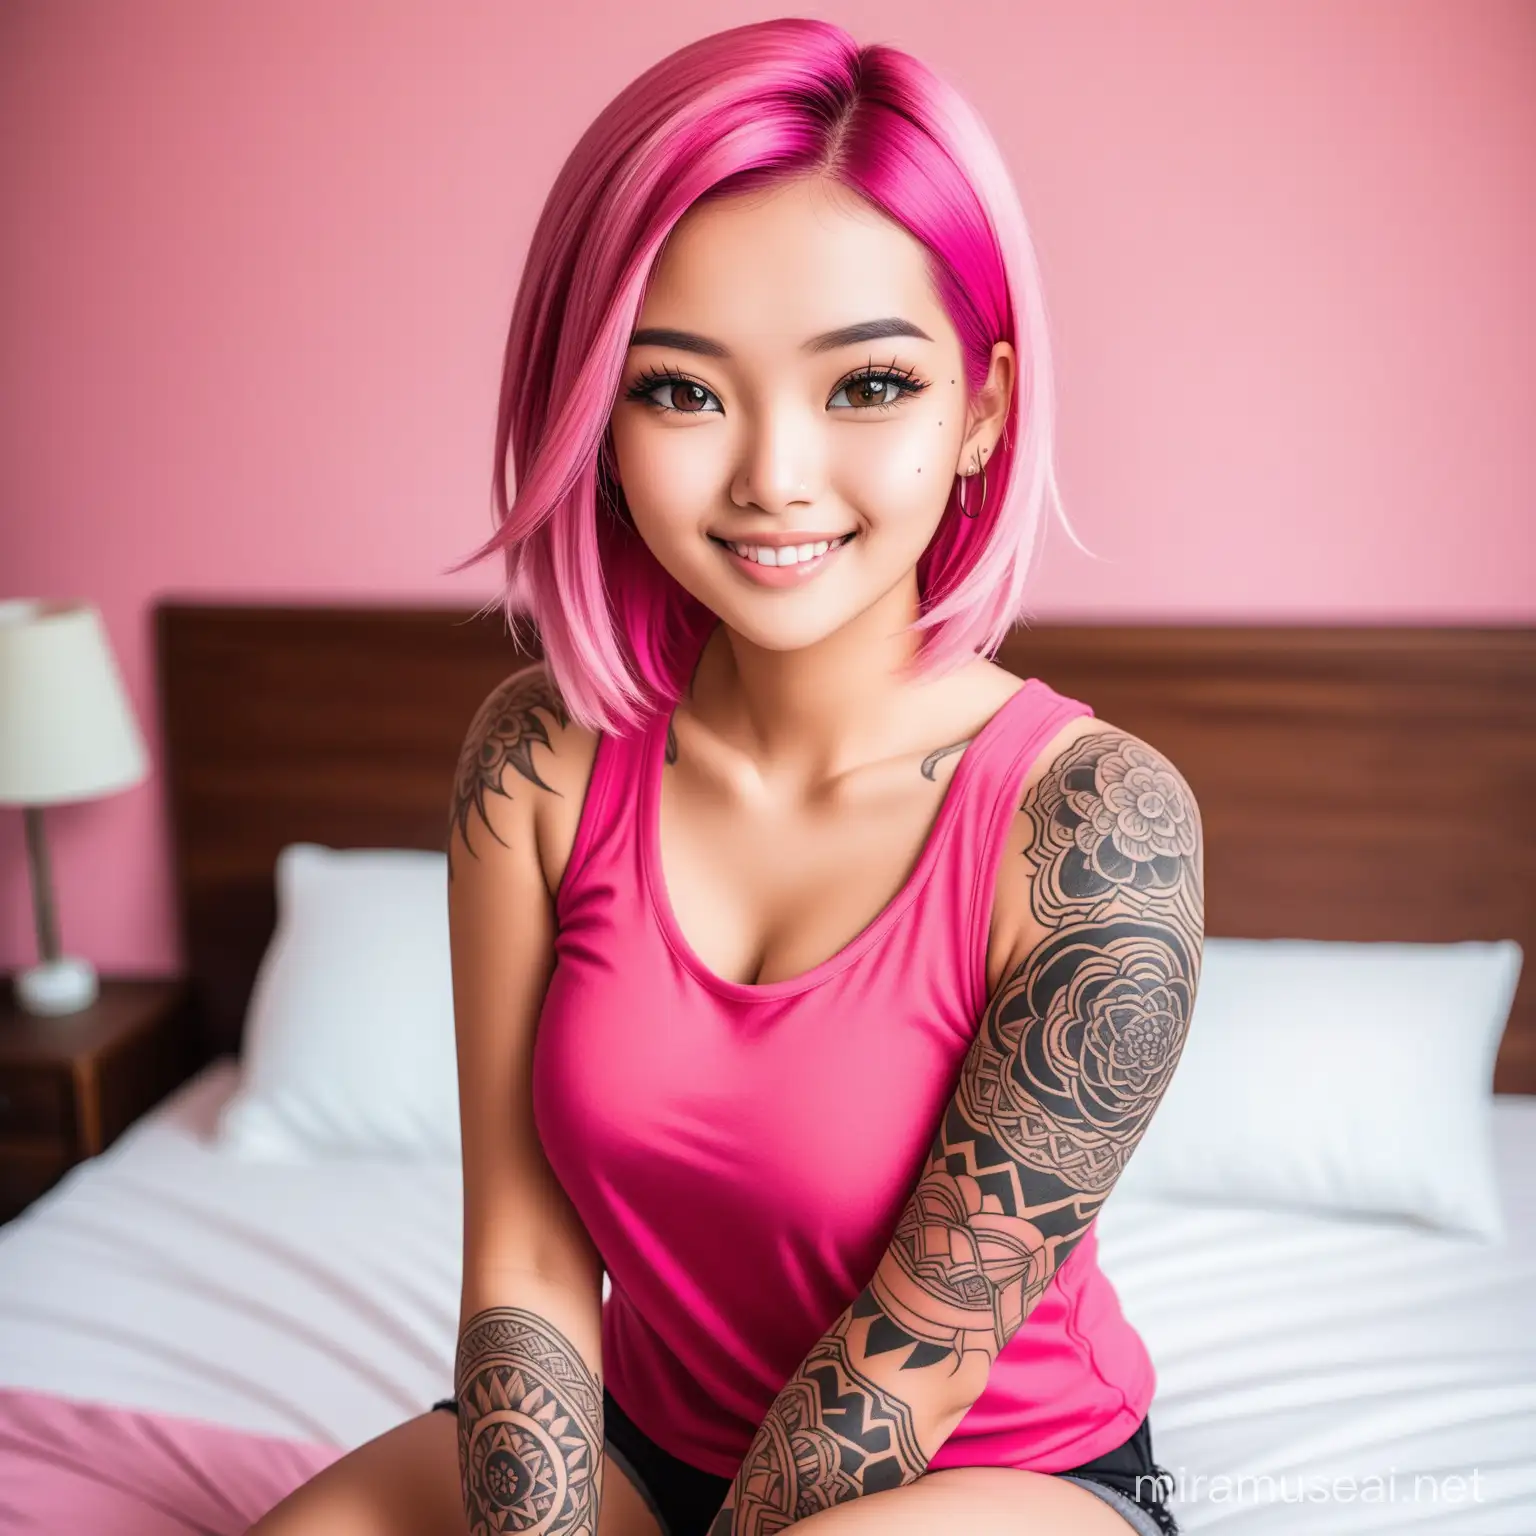 Potret seorang cewek cantik berwajah asli Indonesia usia 25 tahun berambut pink memakai tangtop pink cerah bertatok dibagian lengan tangan sedang duduk diatas kasur ekspresi wajah tersenyum tipis manis
Latar belakang kamar tidur